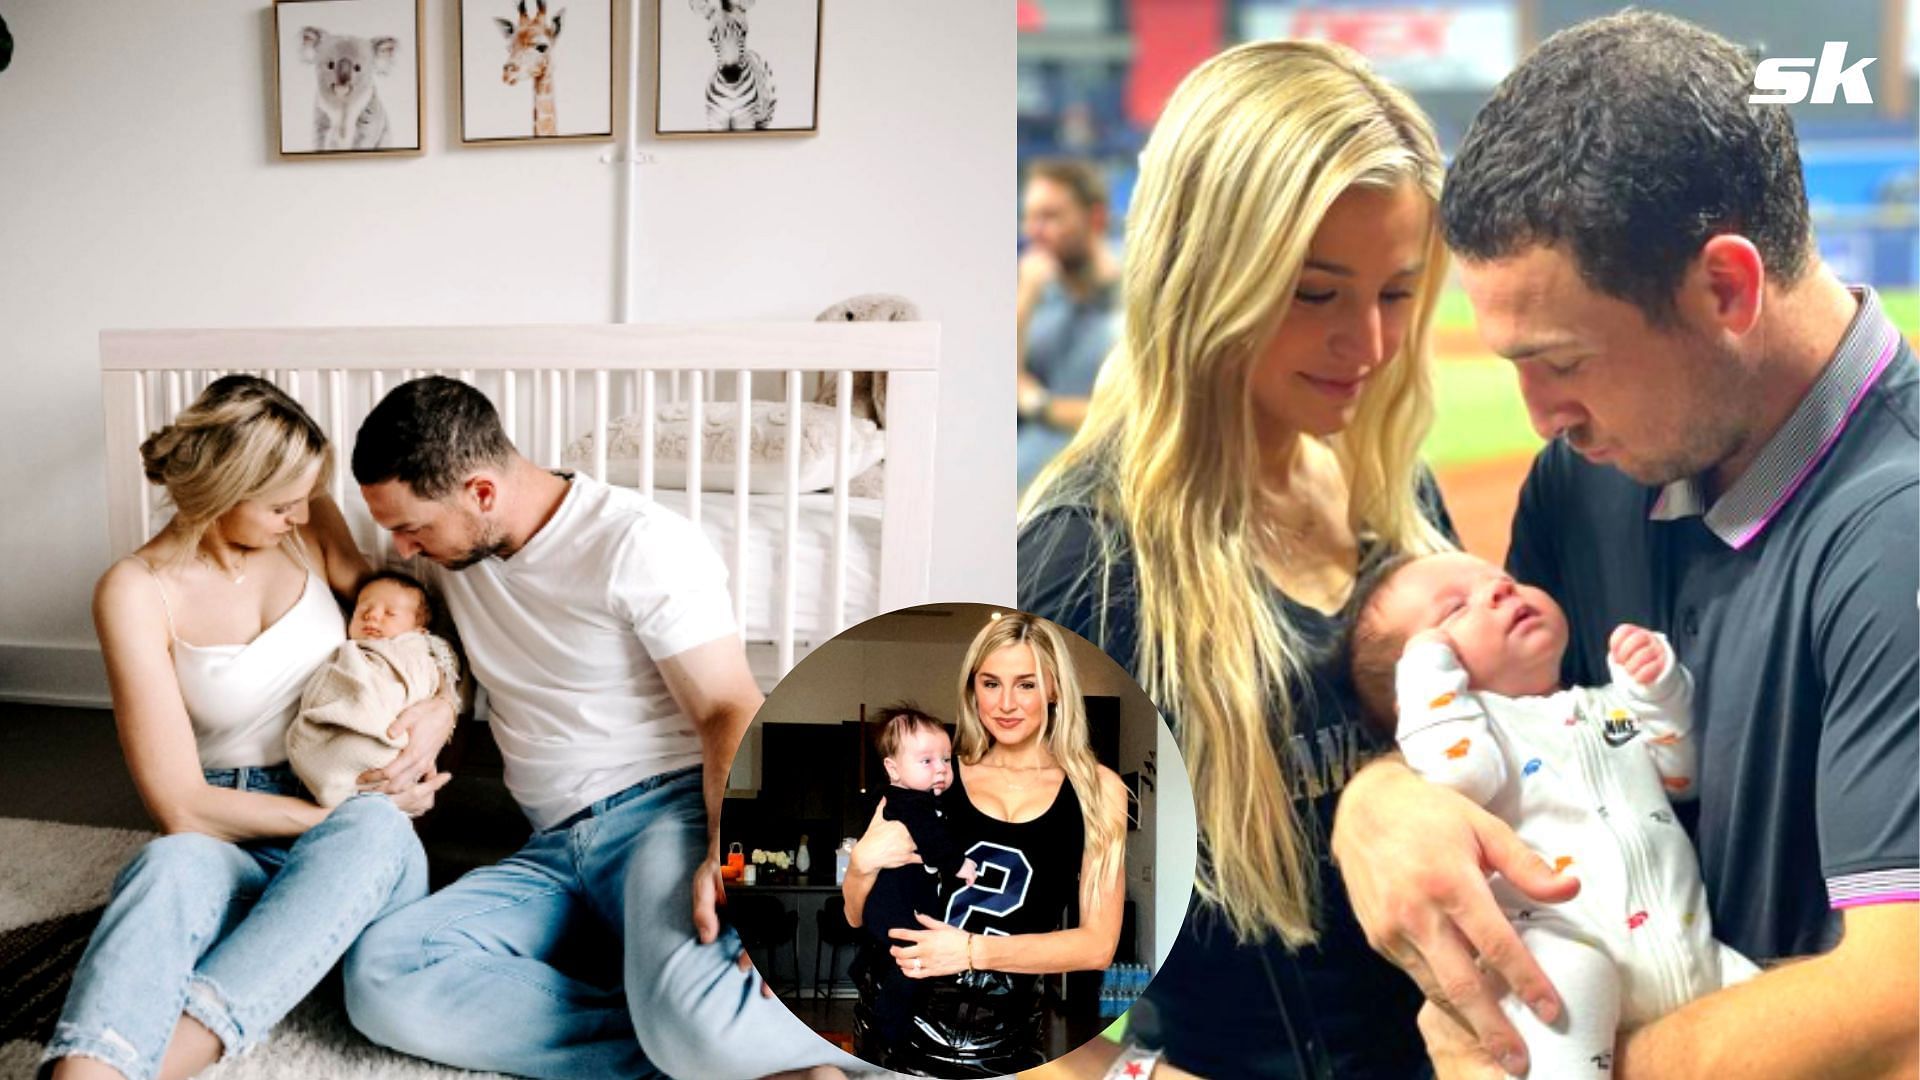 Houston Astros third baseman and shortstop Alex Bregman with his wife, Reagan Bregman and their newborn, Knox.